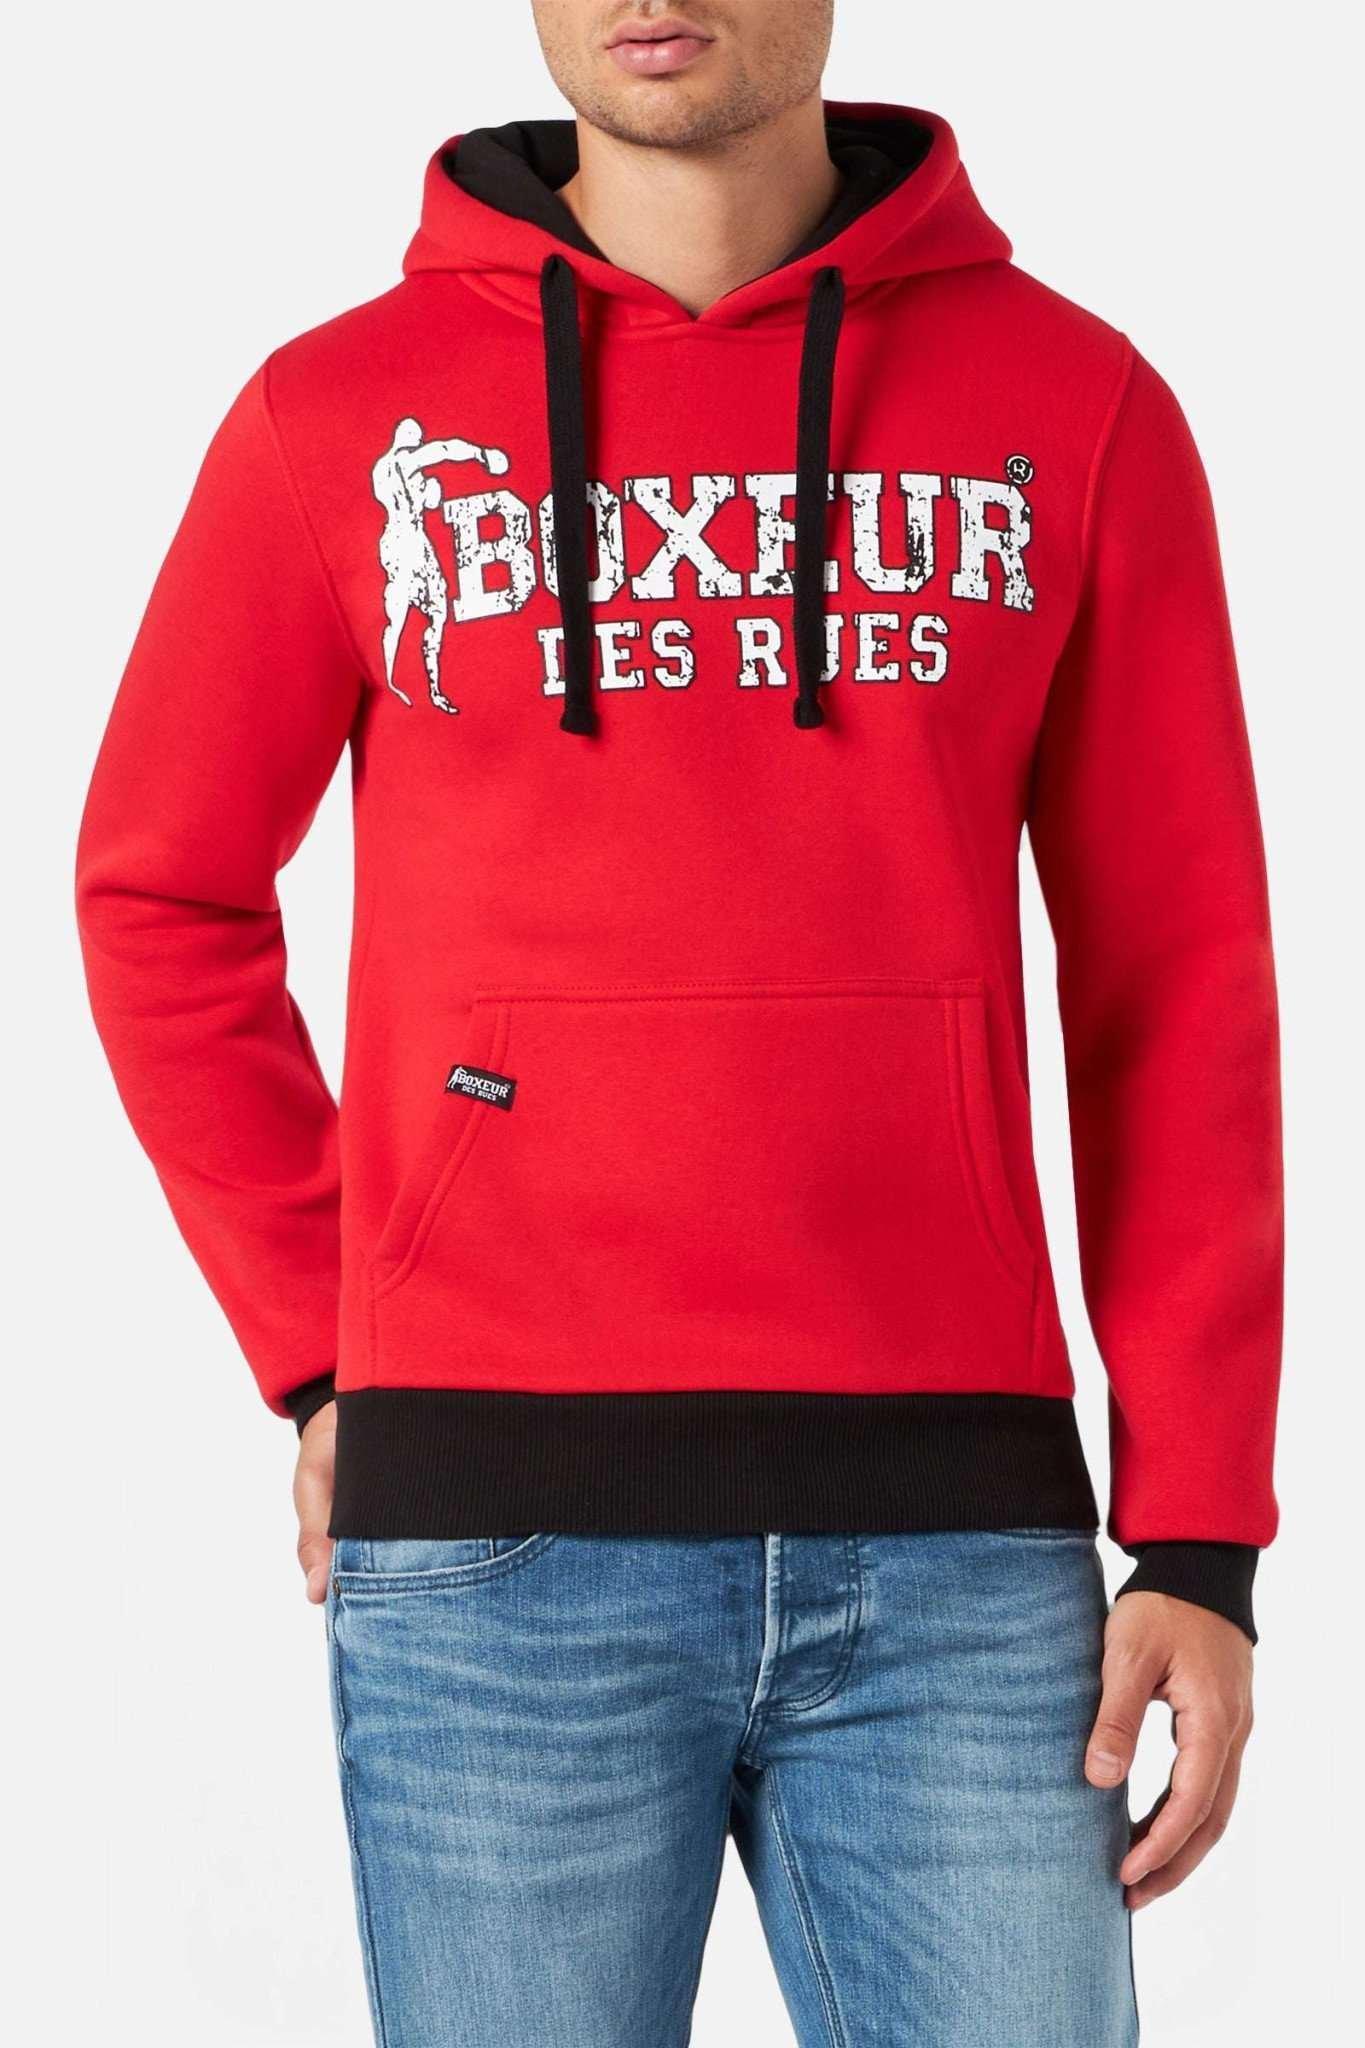 Sweatshirts Man Hoodie Sweatshirt Herren Rot Bunt M von BOXEUR DES RUES